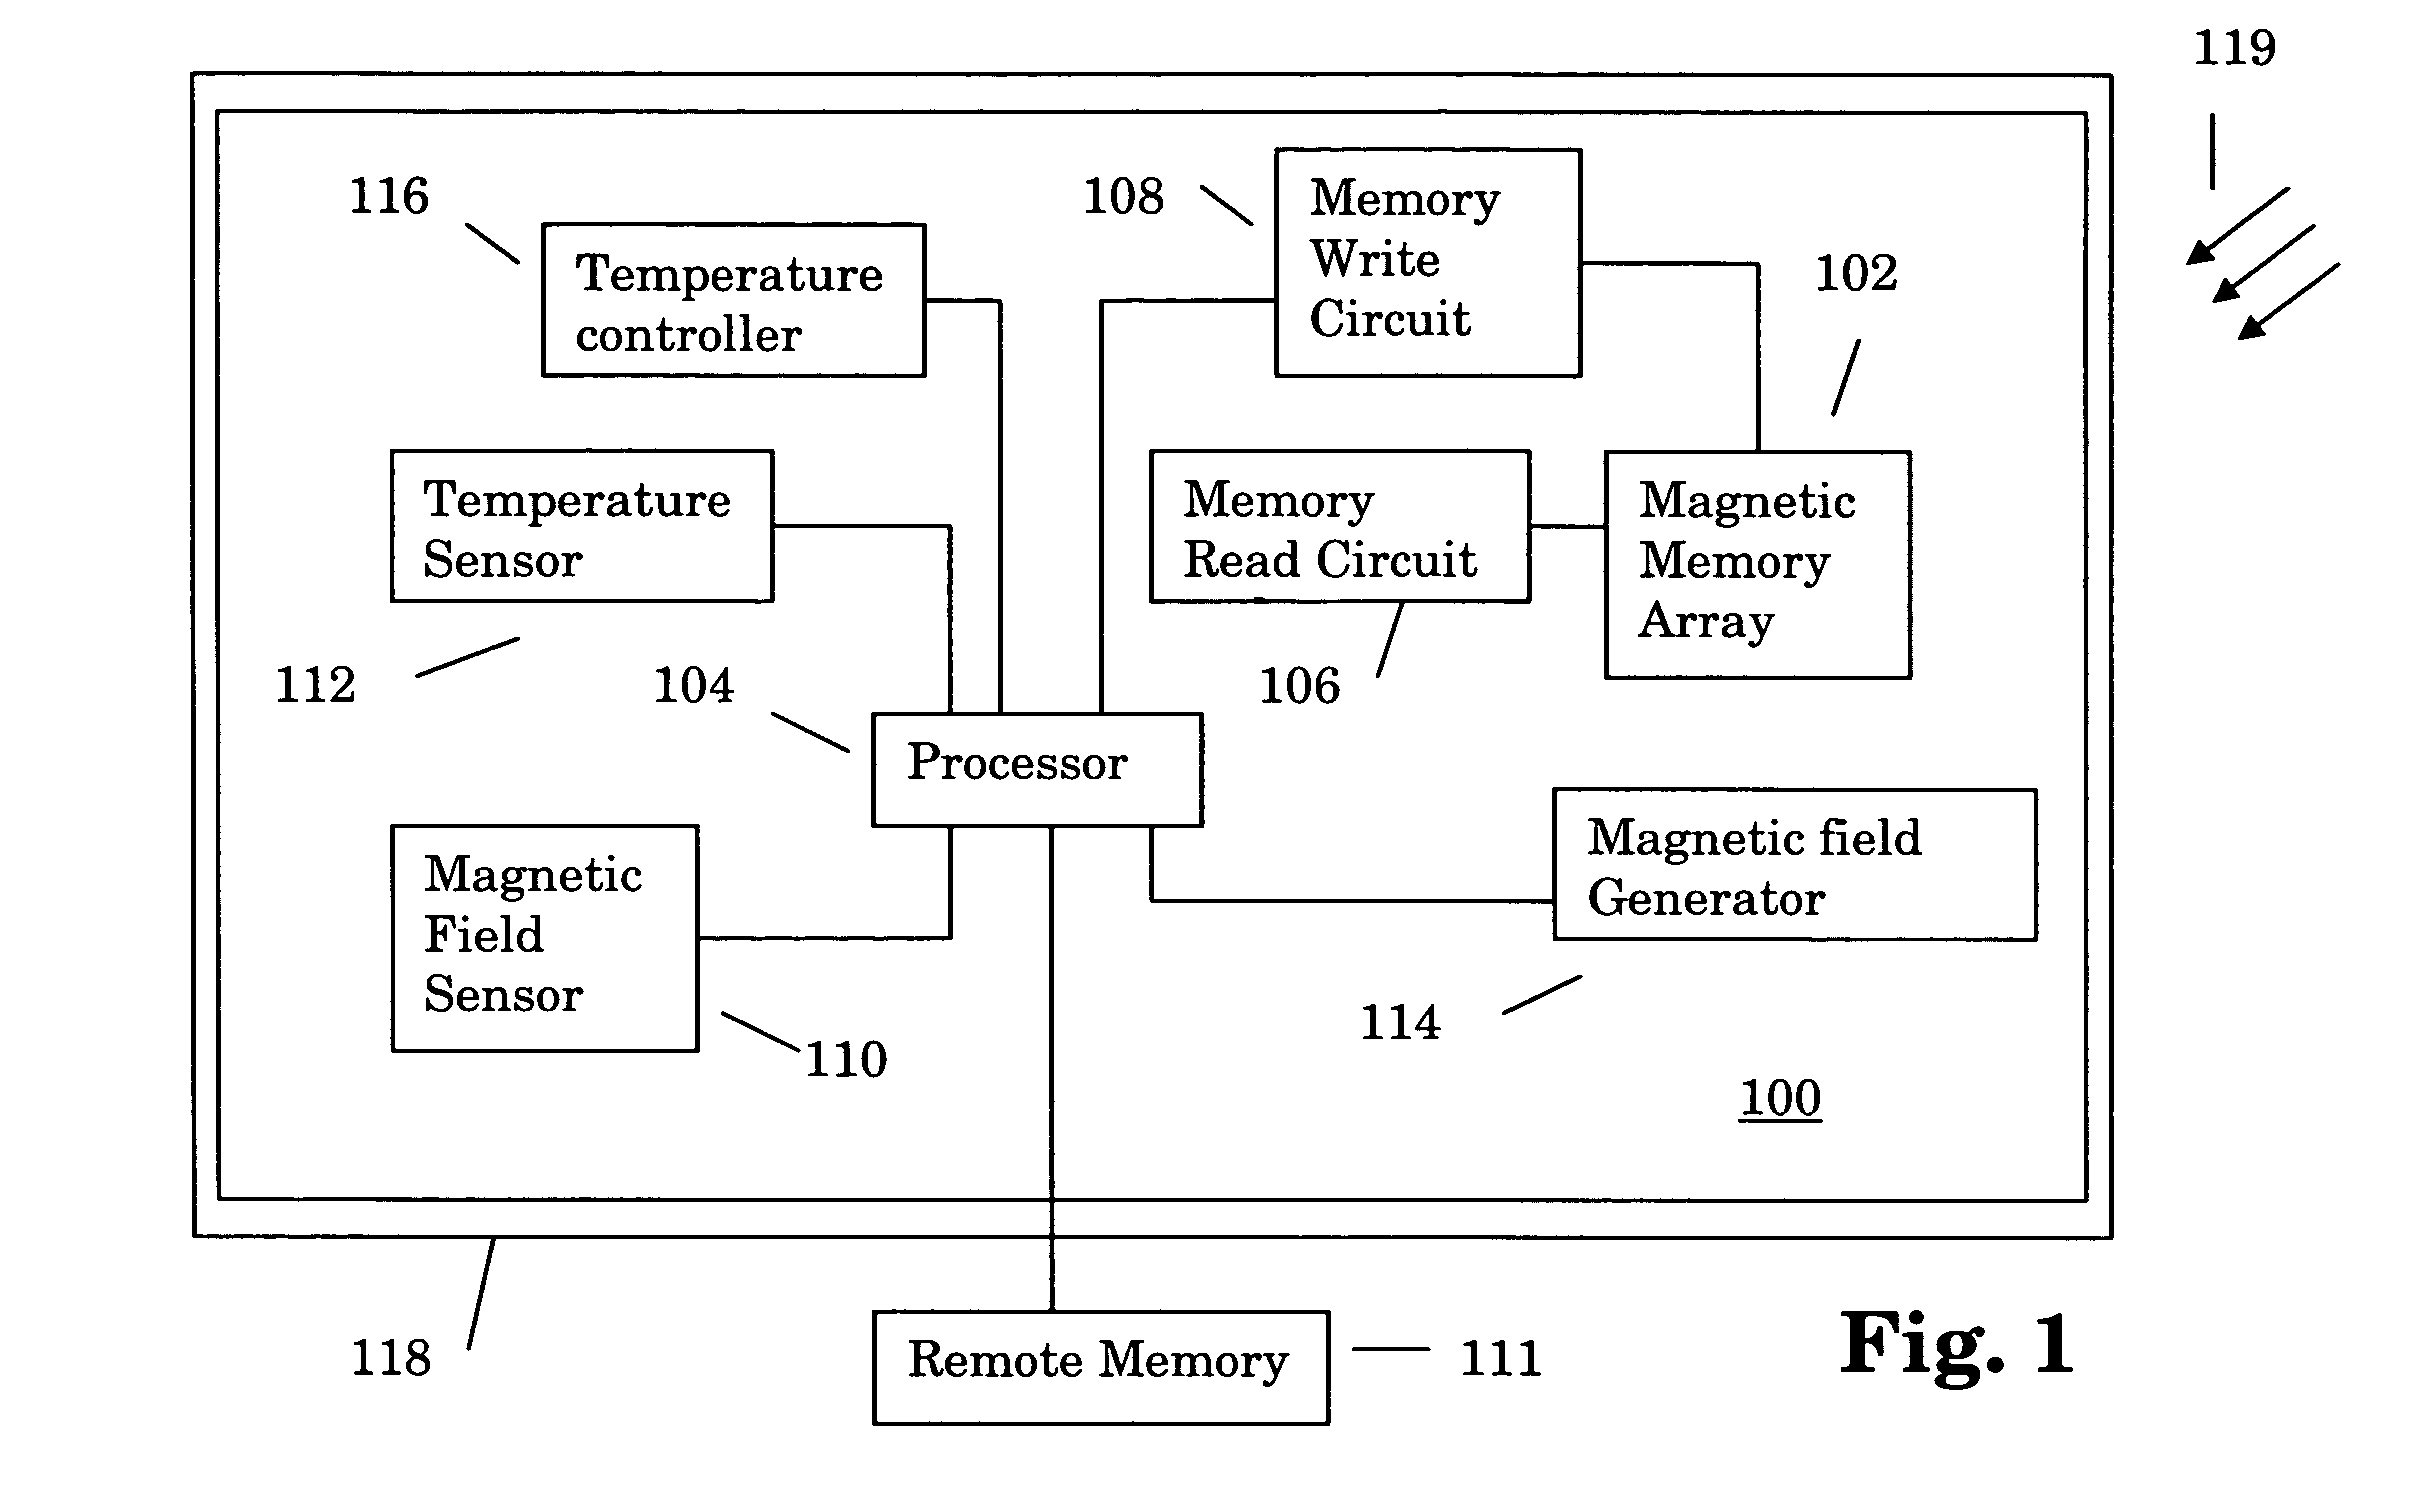 Sensor compensation for environmental variations for magnetic random access memory